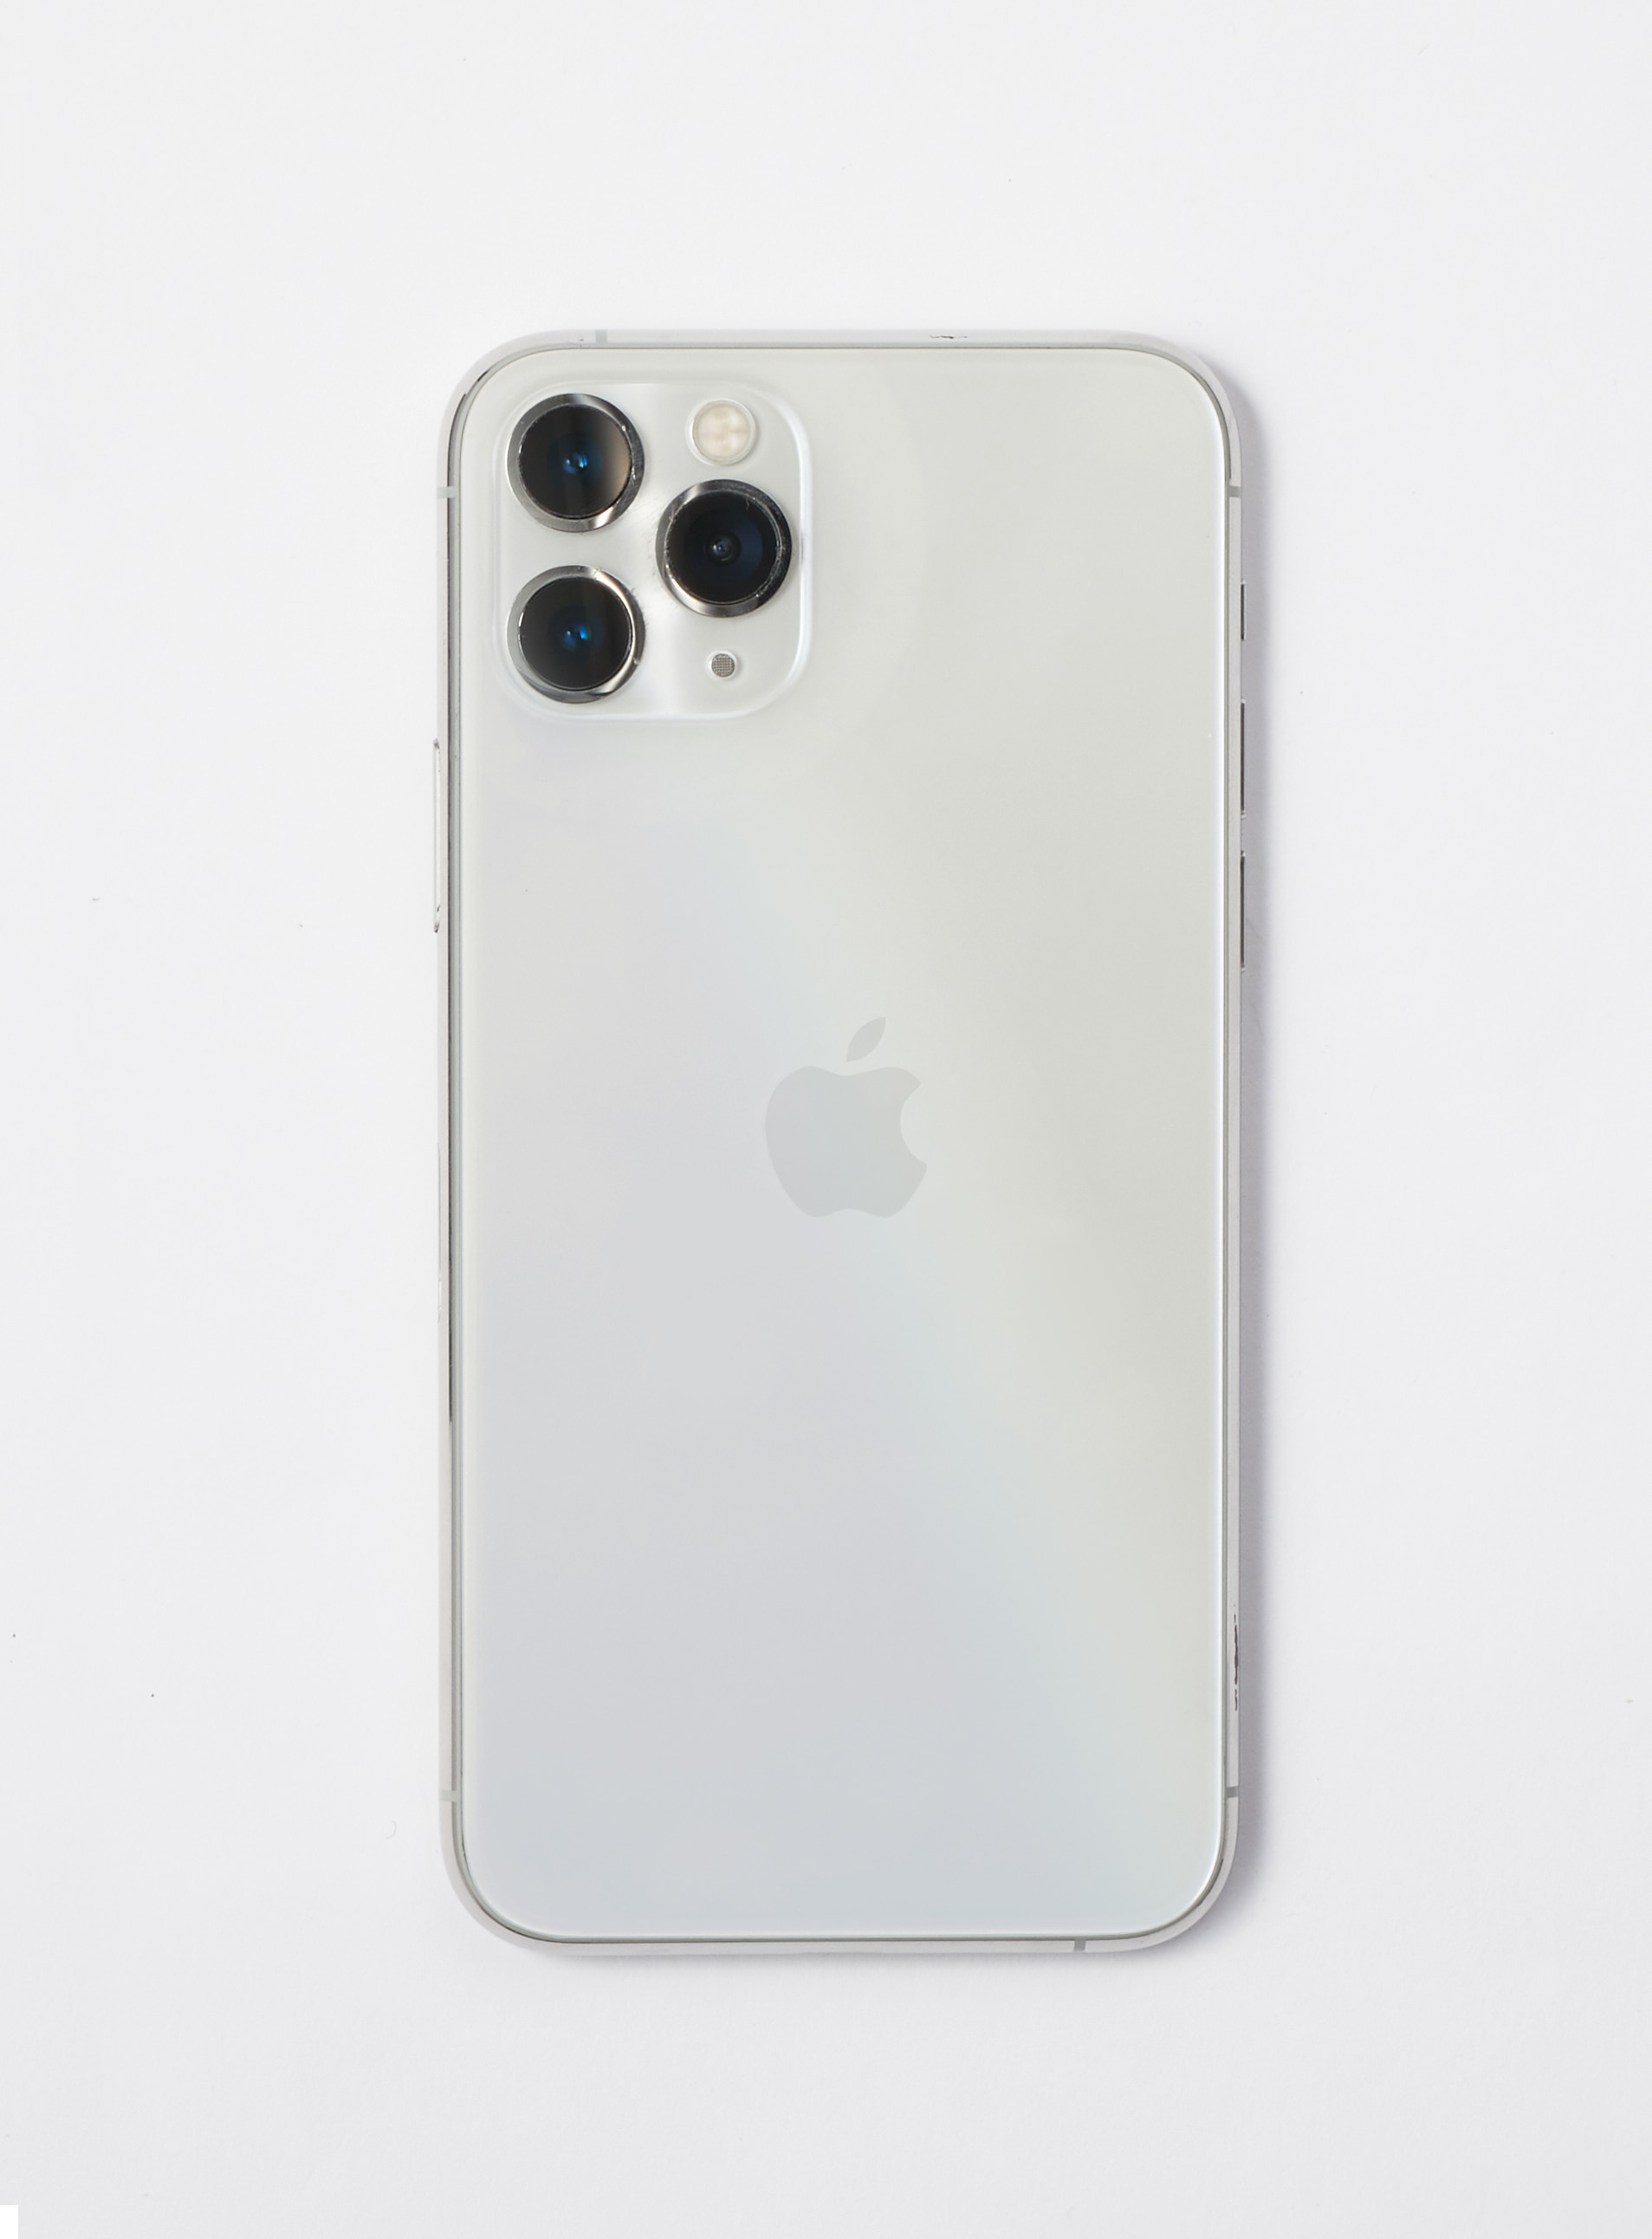 Apple iPhone 11 Pro Max 256GB Smartphone (silver, unlocked, certified  refurbished)